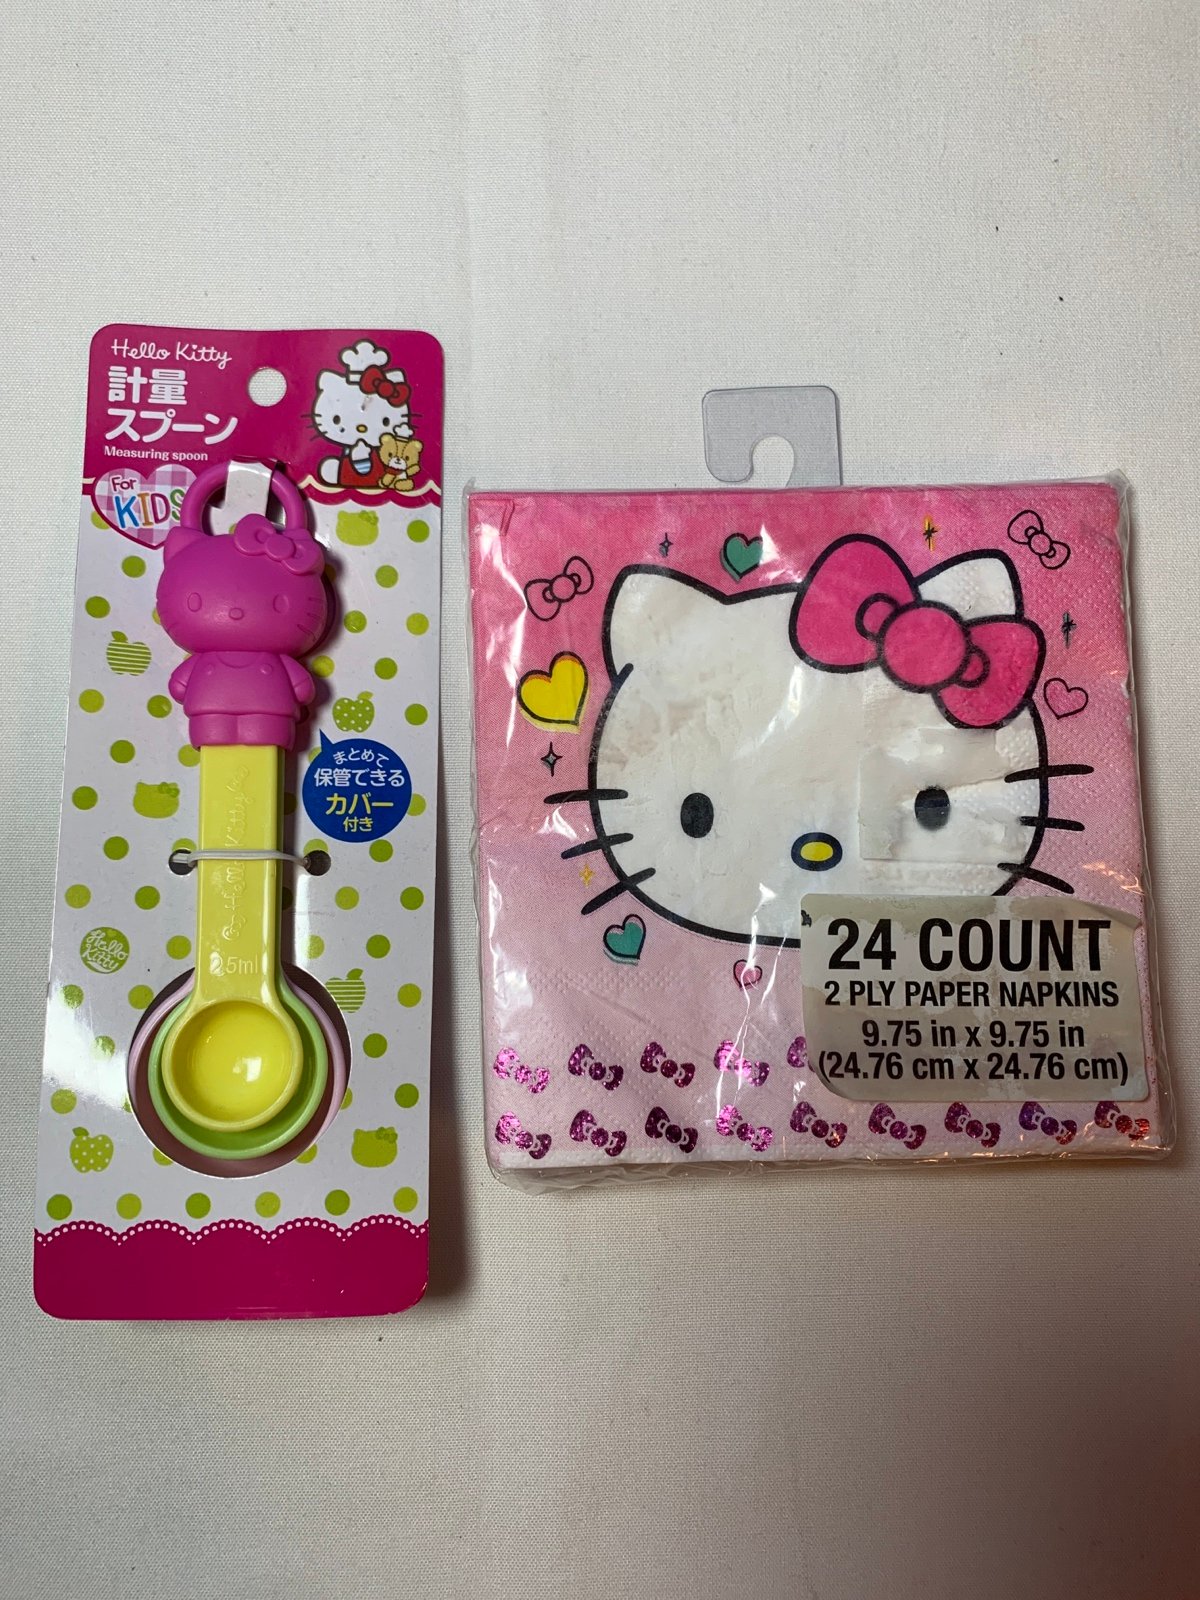 Hello Kitty measuring and Napkins opFV7ExxR